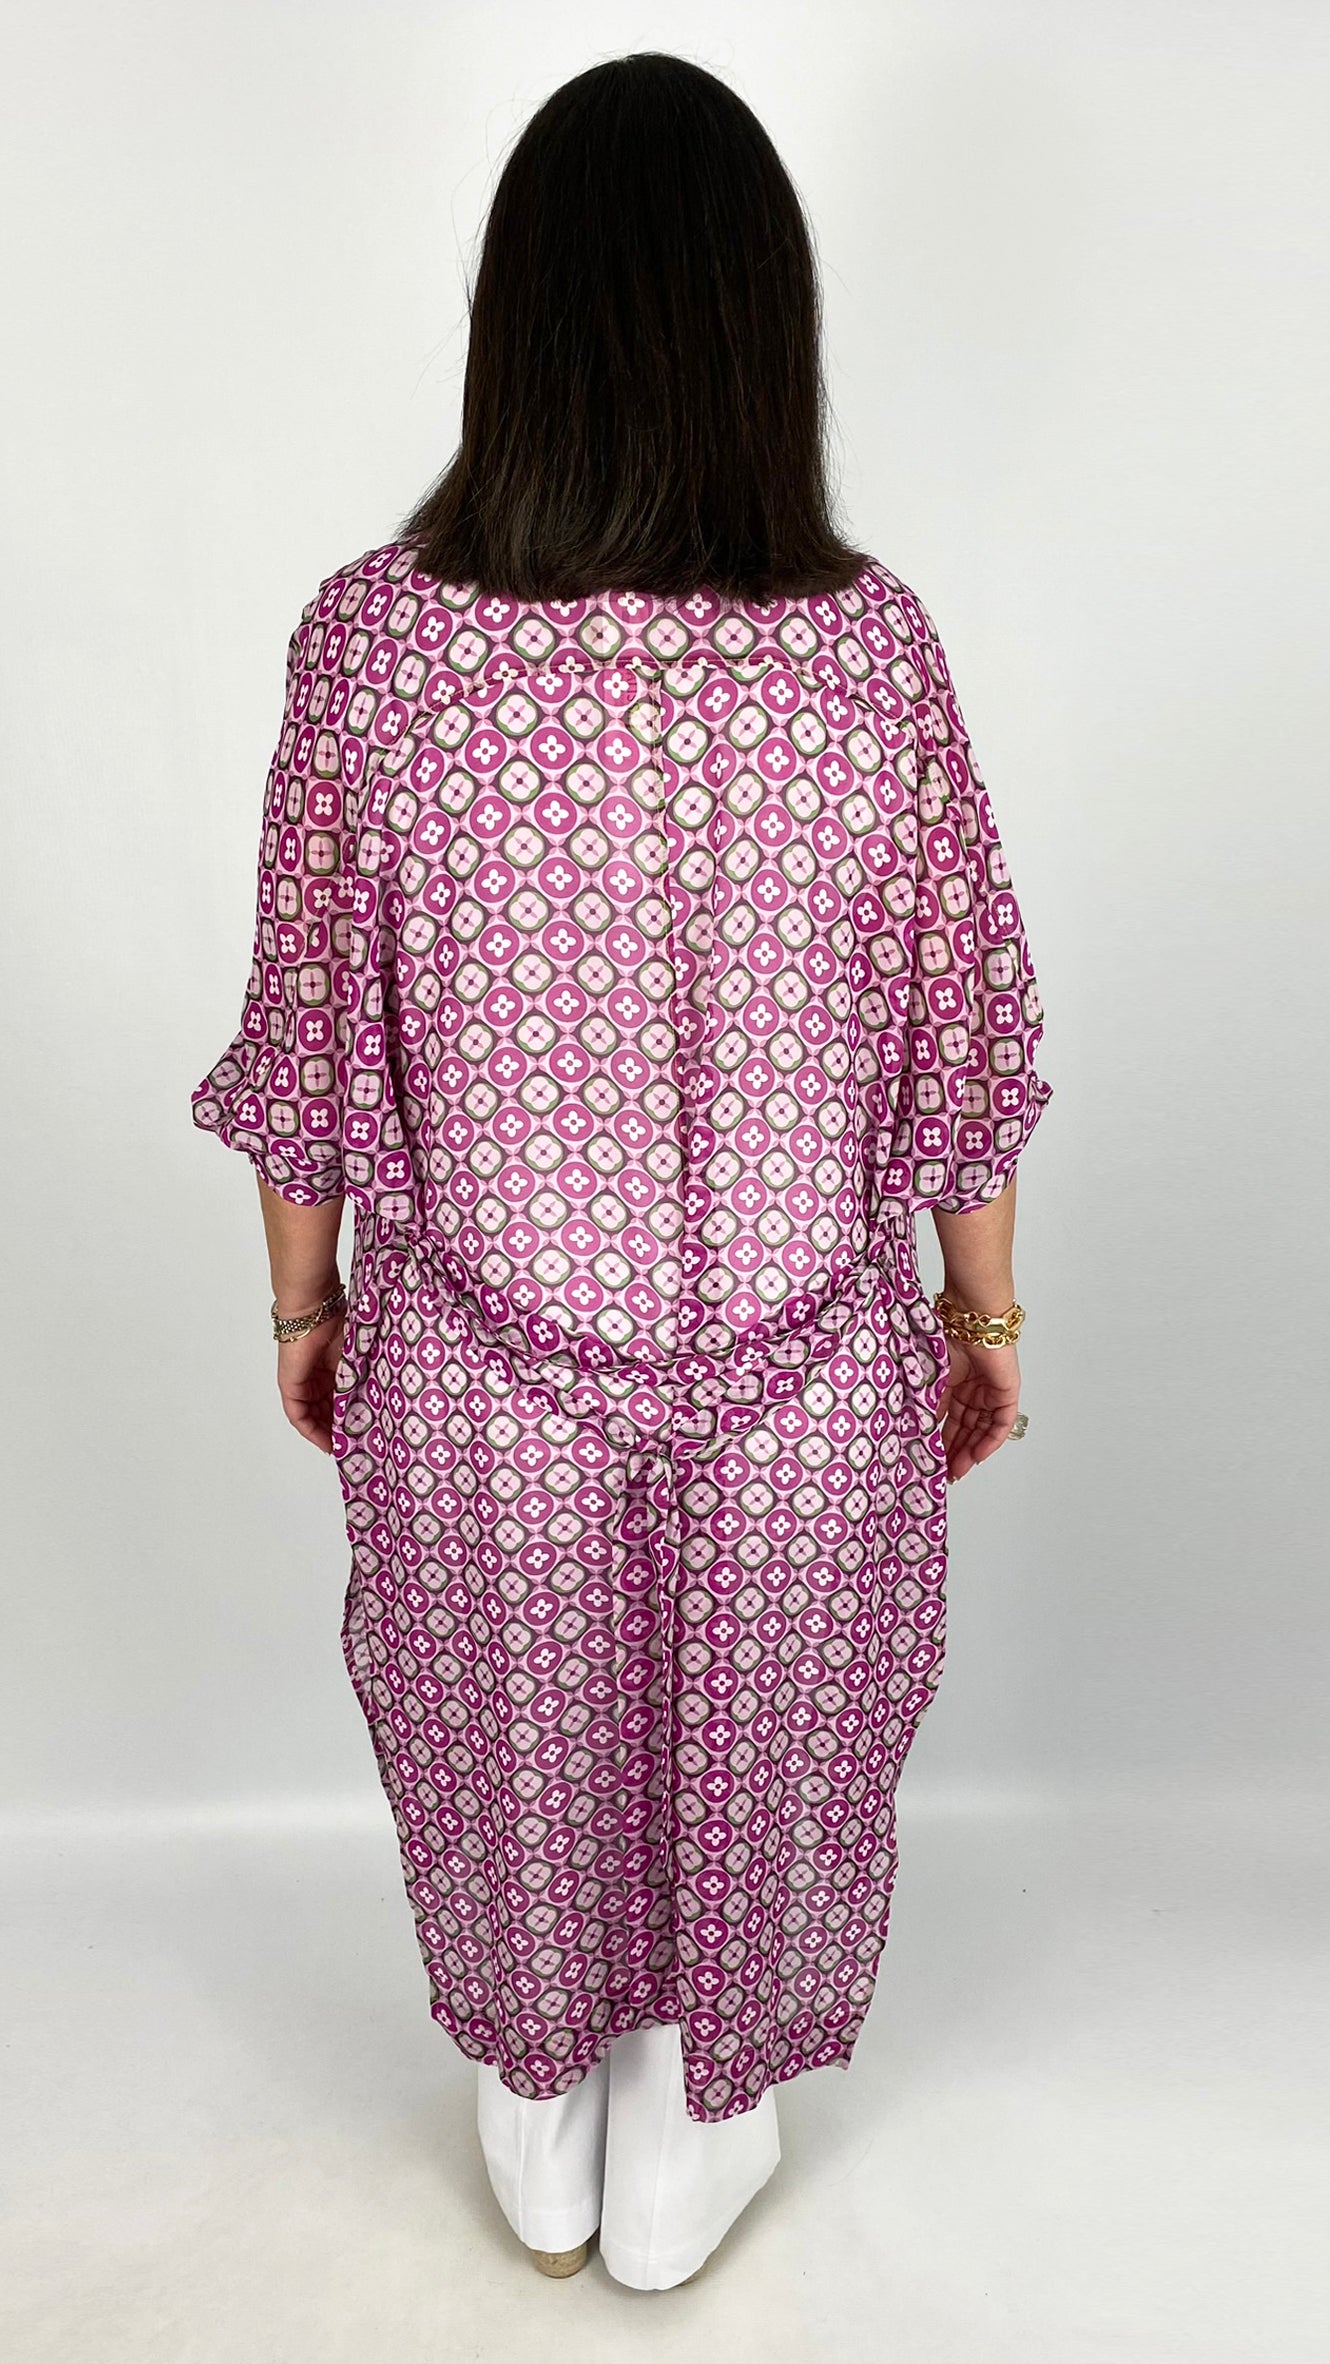 Contrast collar print long shirt by Malissa J (Pink Circles)